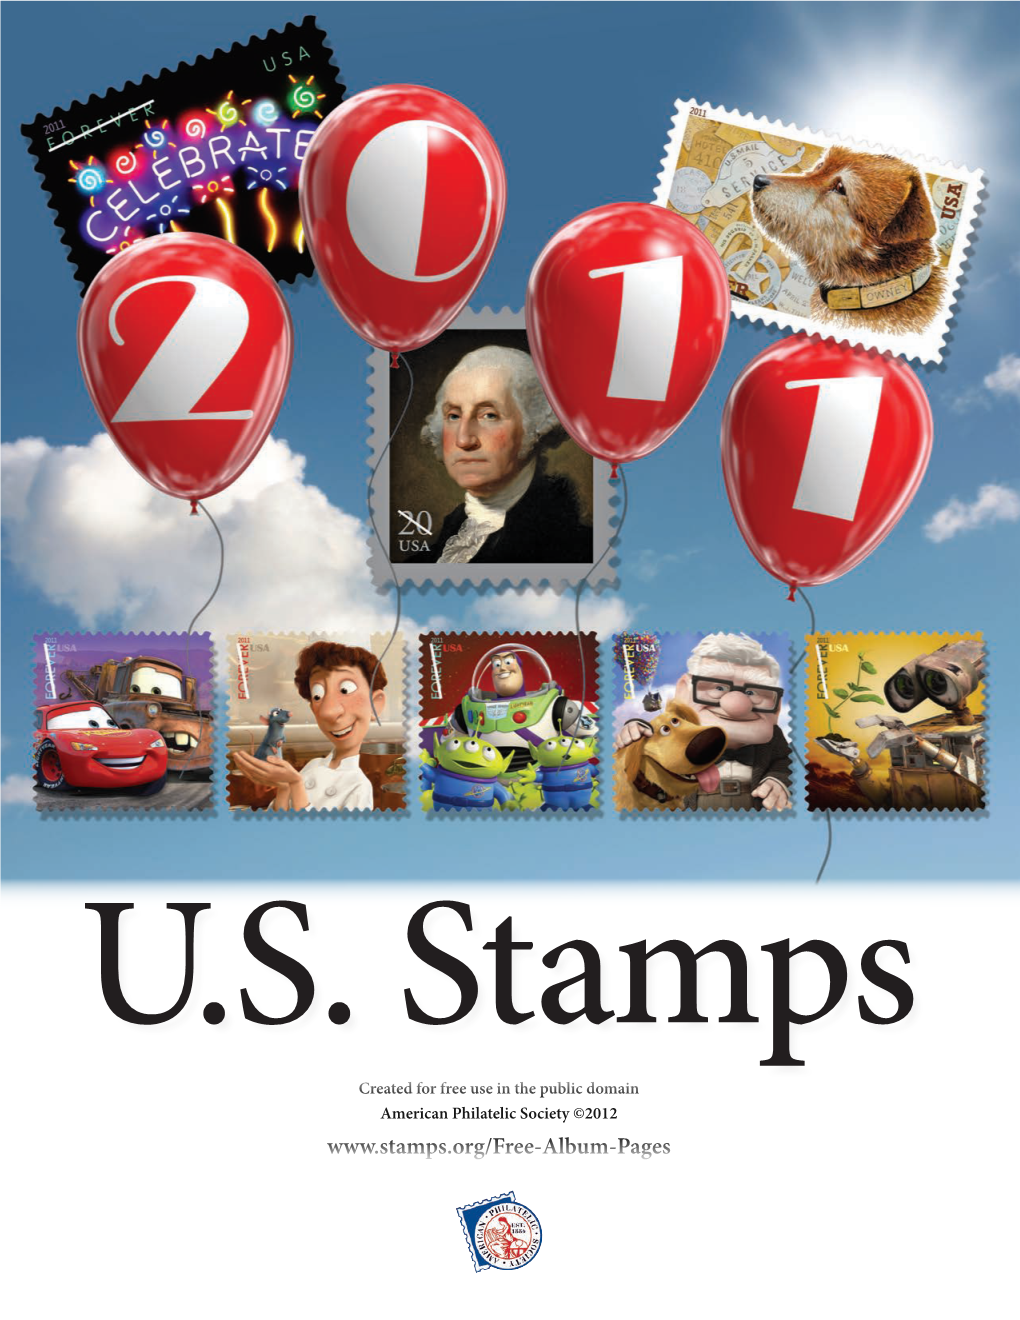 2011 United States Postage Stamps January 22 January 27 February 10 Year of the Rabbit Kansas Statehood Ronald Reagan (1911–2004)